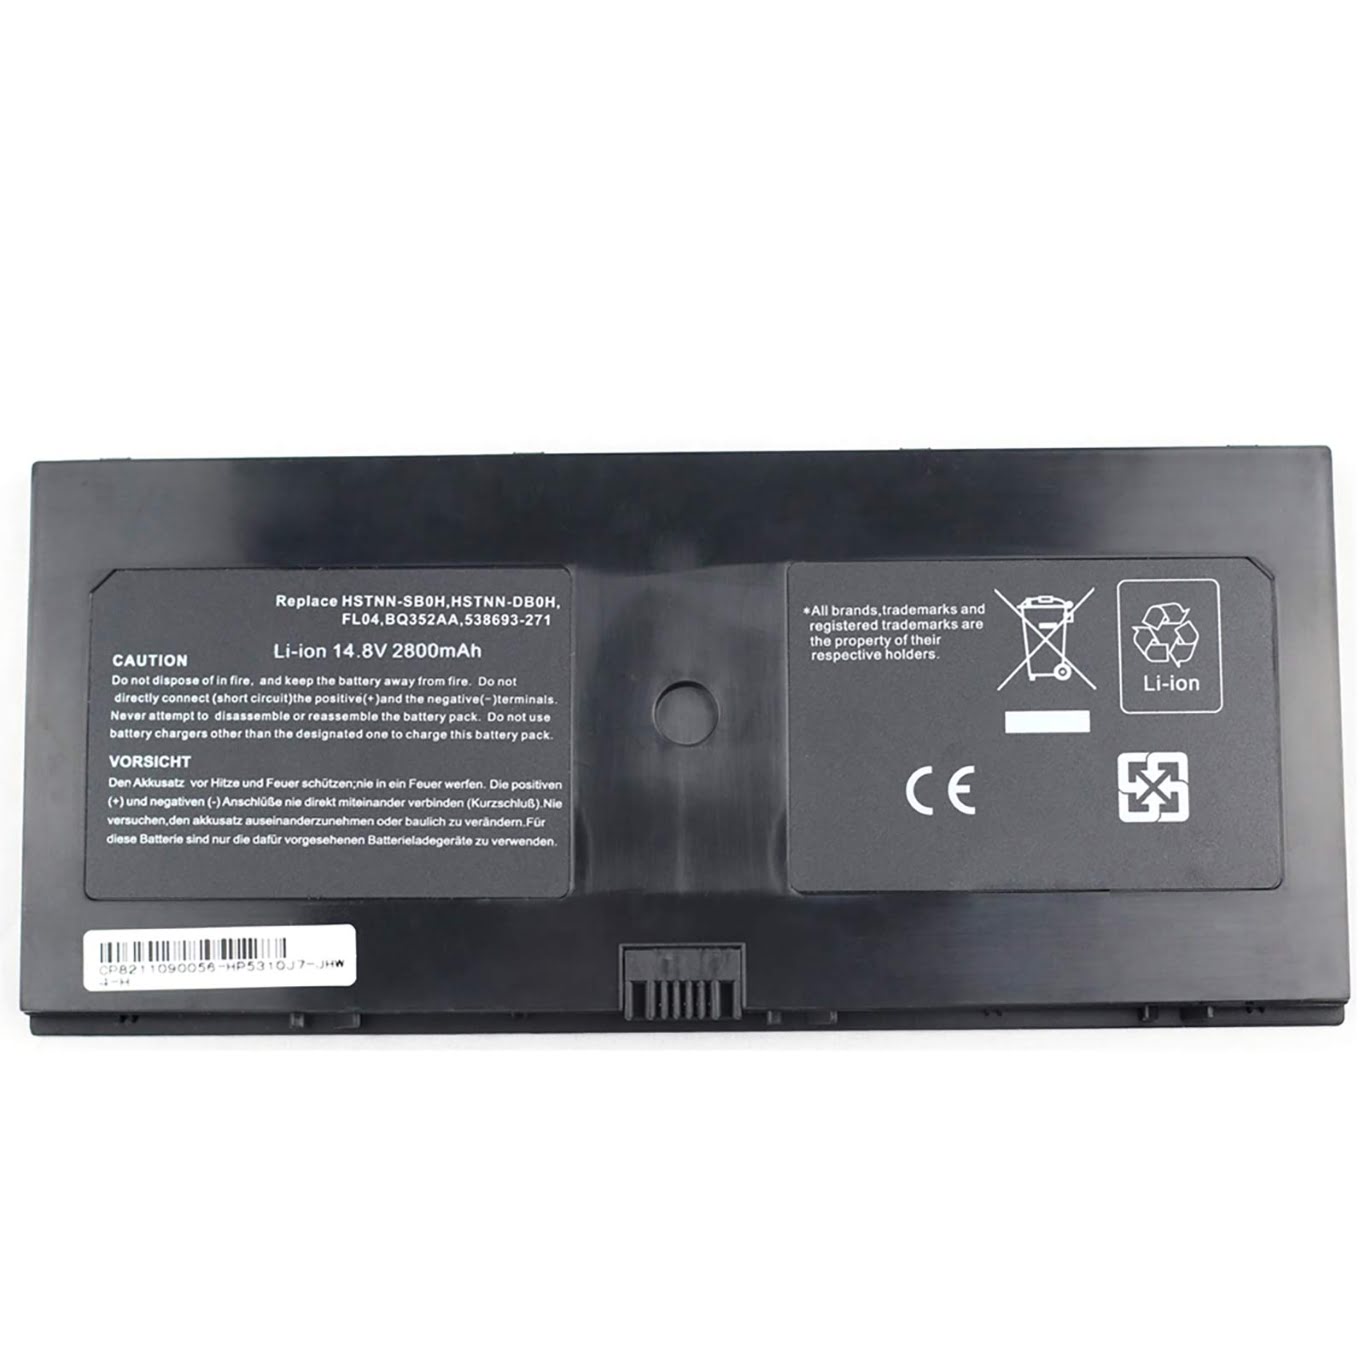 Hp 538693-271, Bq352aa Laptop Battery For Probook 5310m, Probook 5320m replacement